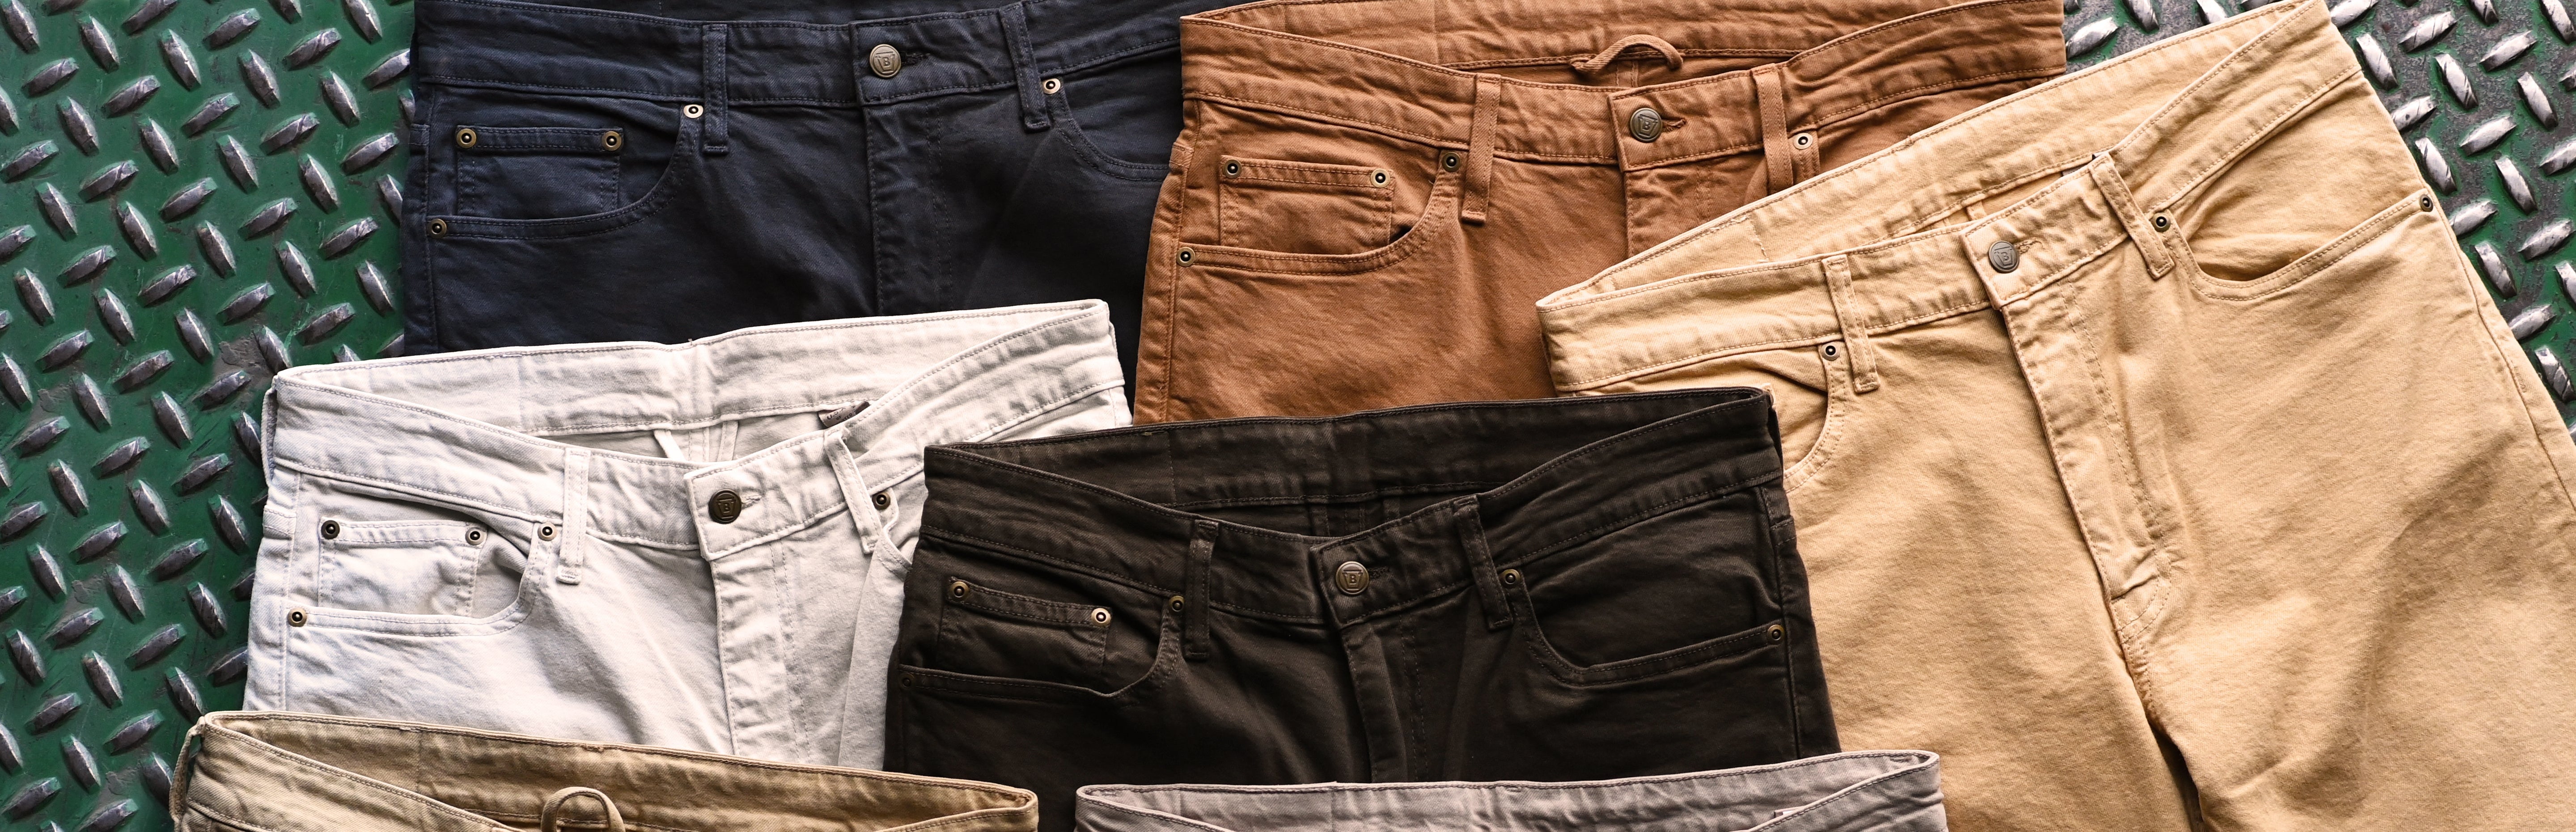 Men\'s 5 Pocket Pants & Khakis, Cut & Sewn in the U.S.A - Bills Khakis